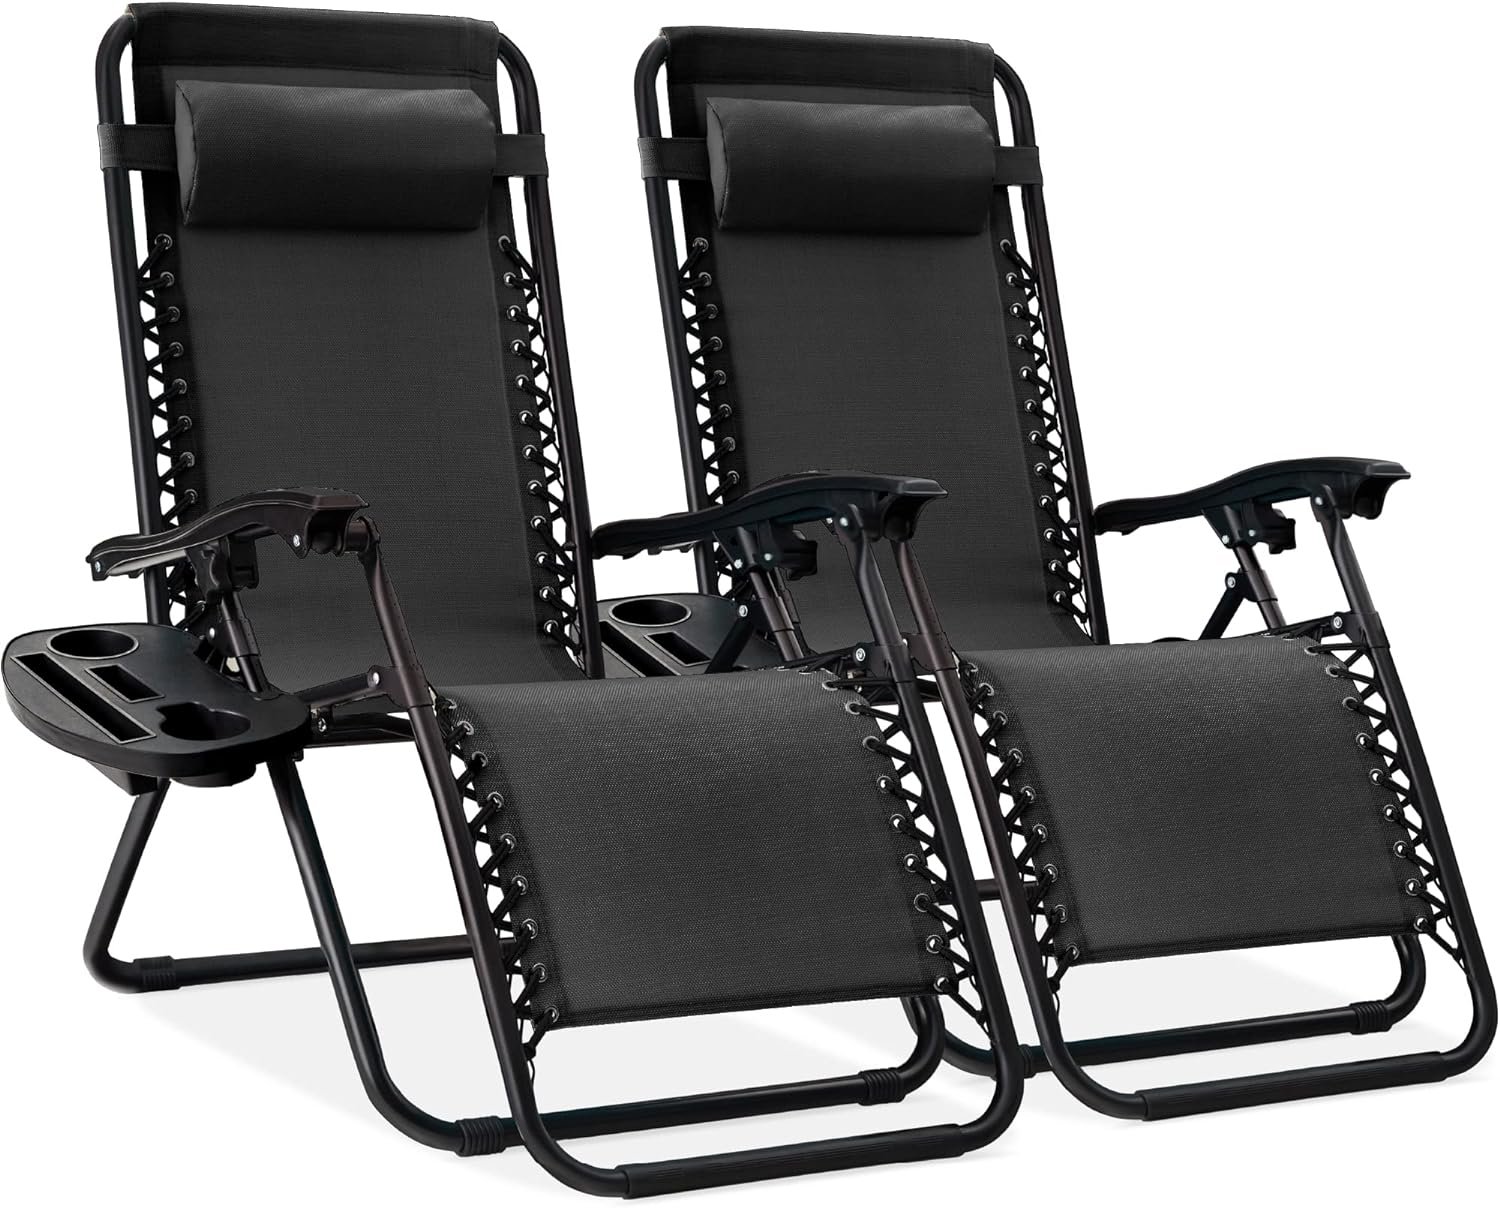 Adjustable Steel Mesh Zero Gravity Lounge Chair Recliner Review